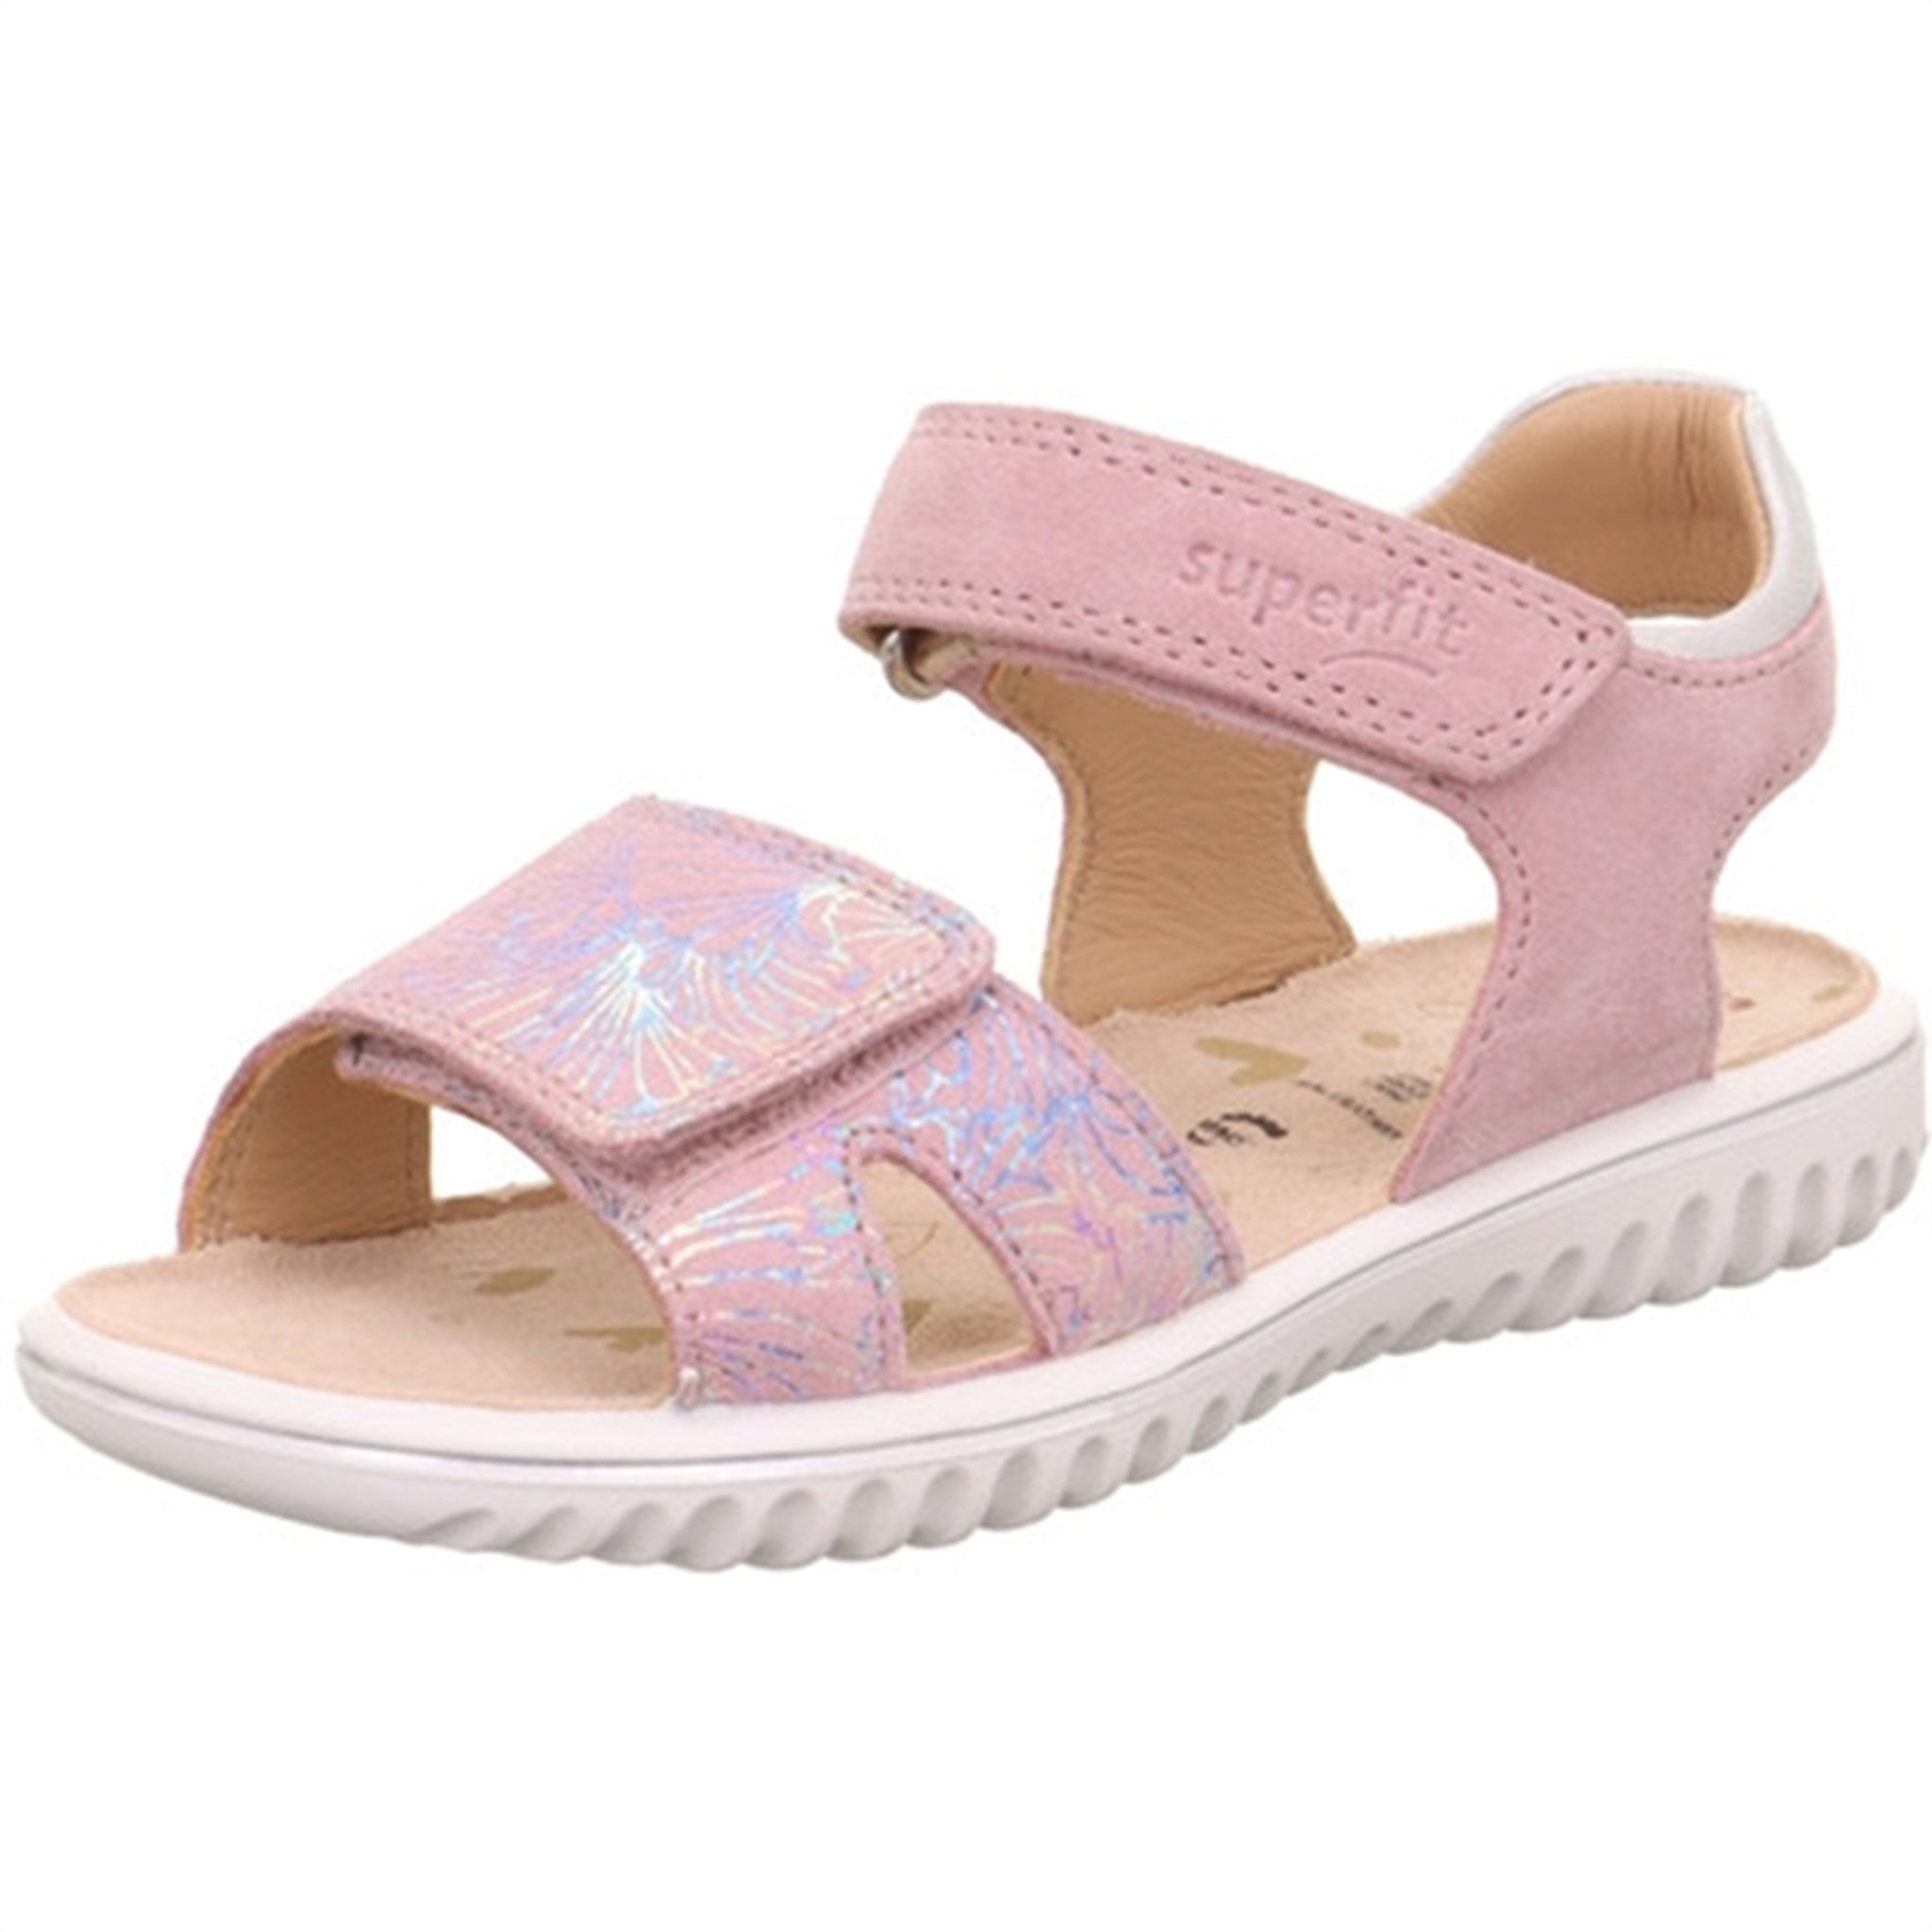 Superfit Sparkle Sandals Pink/Silver